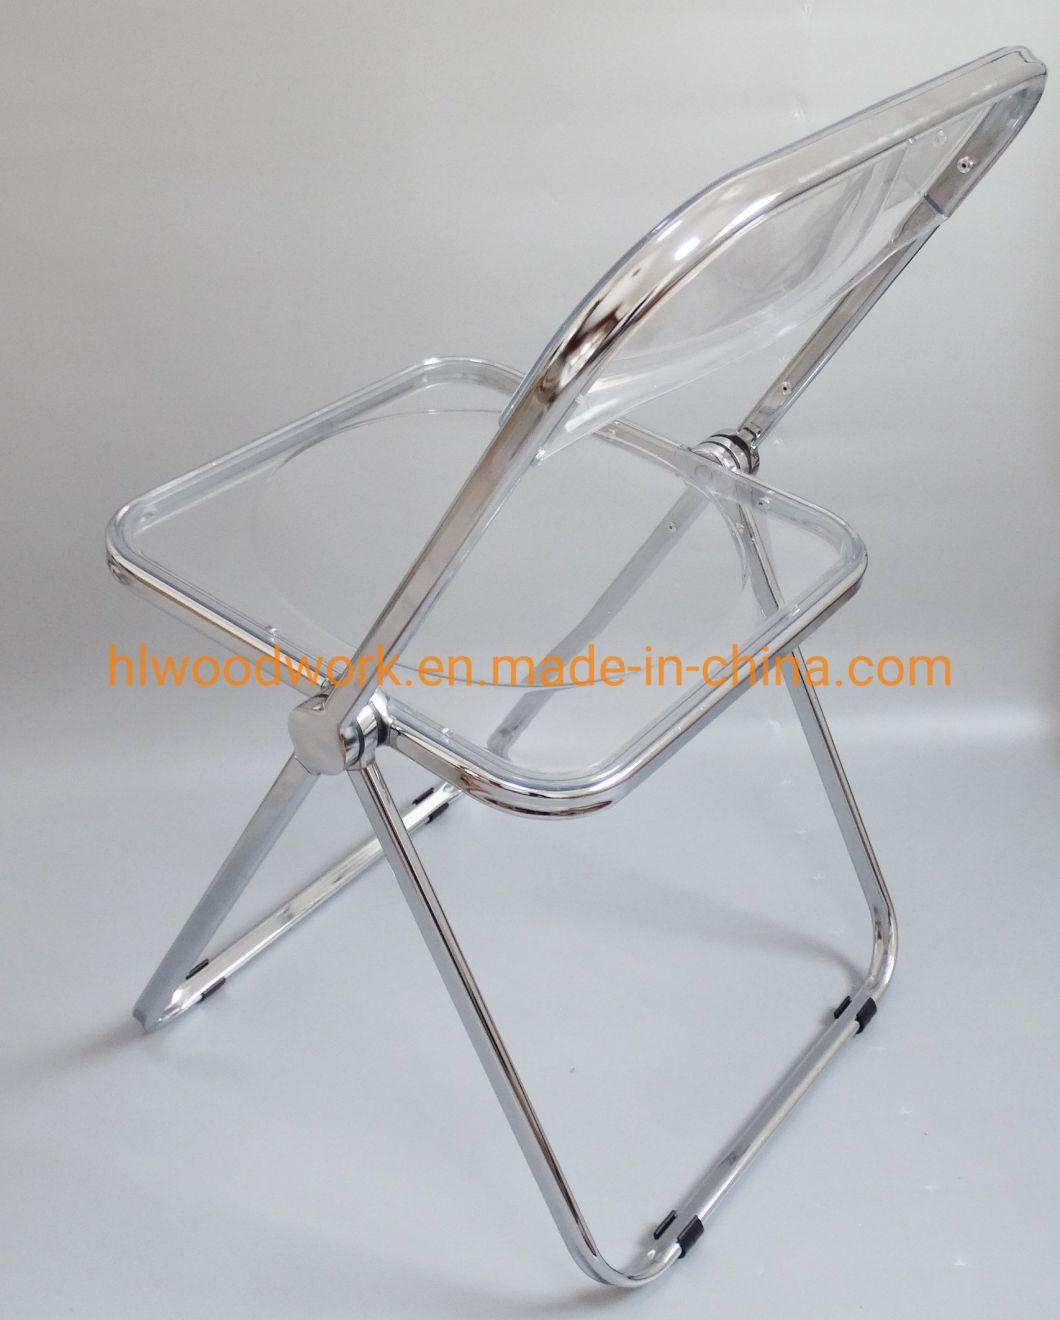 Modern Transparent Grey Folding Chair PC Plastic Meeting Chair Chrome Frame Office Bar Dining Leisure Banquet Wedding Meeting Chair Plastic Dining Chair